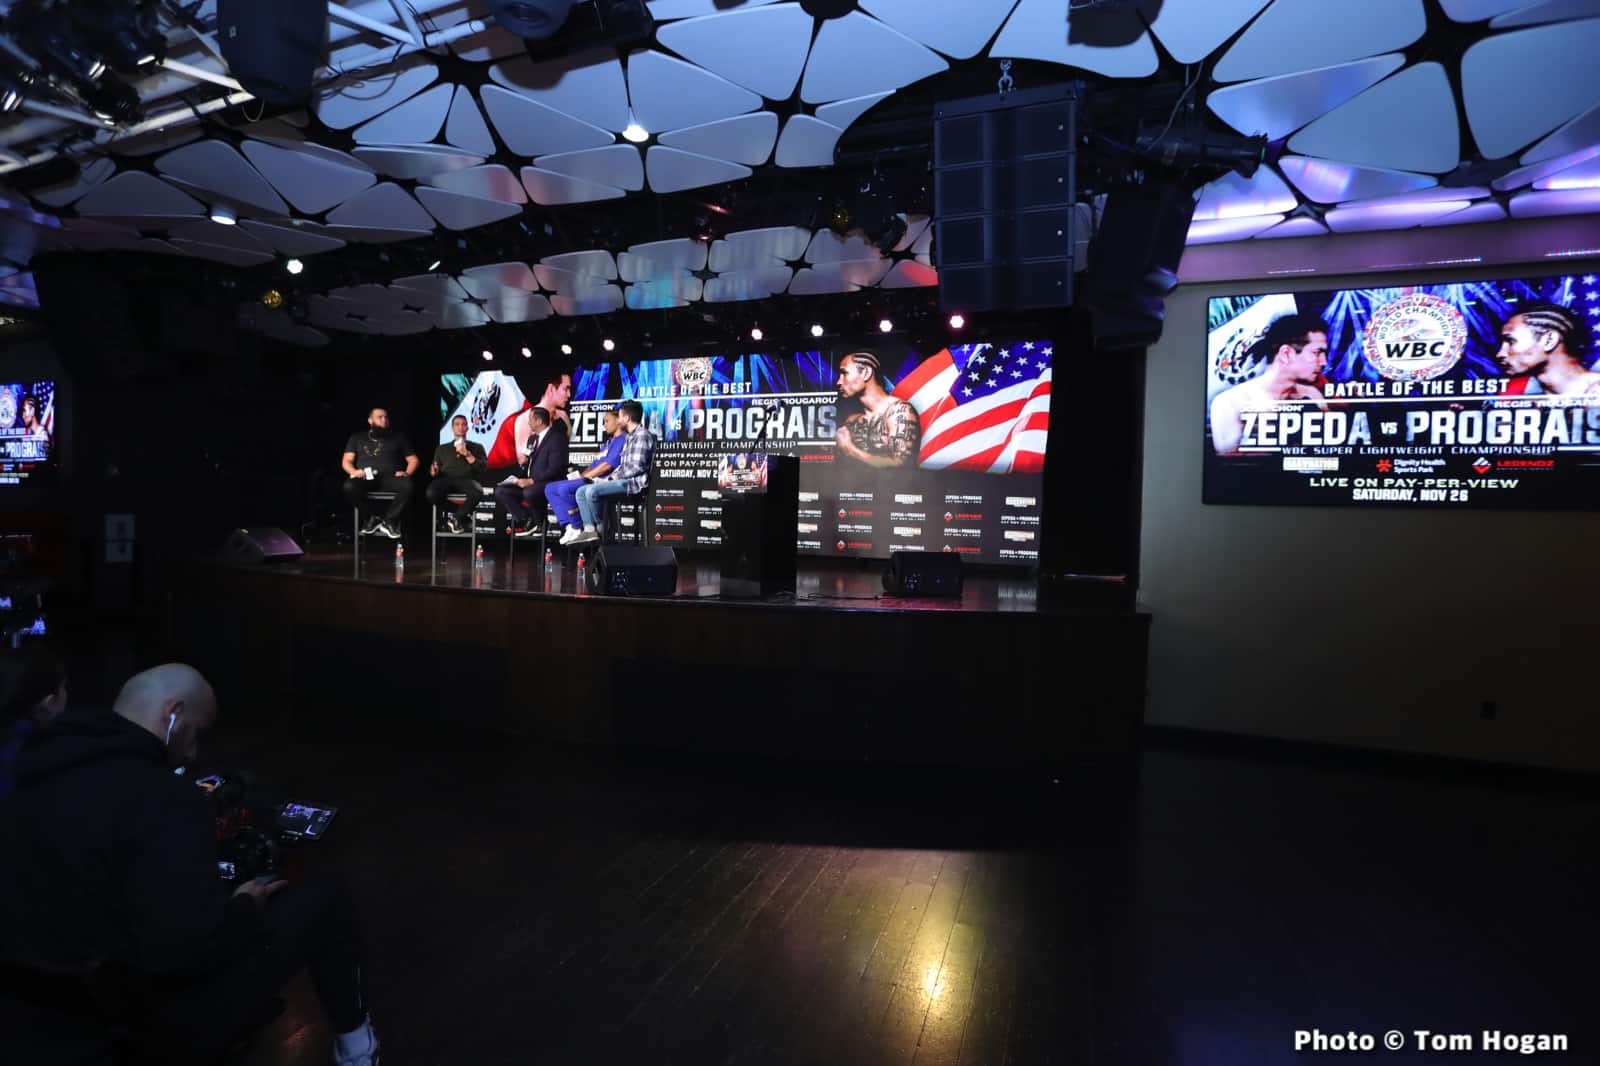 Image: Jose Zepeda battles Regis Prograis on Nov.26th live on FITE TV